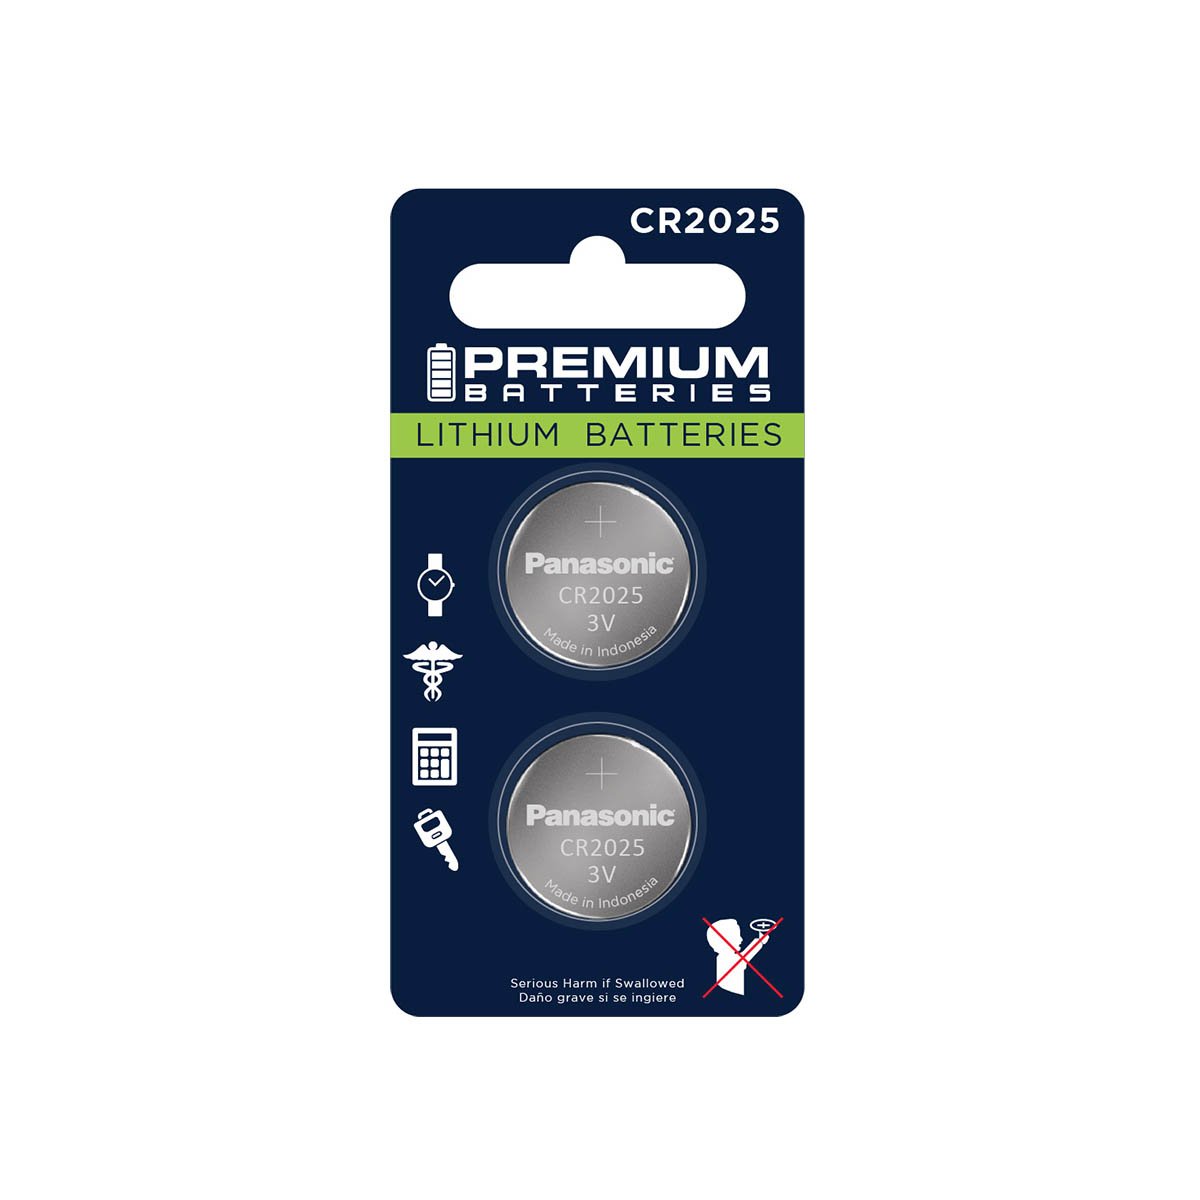 Premium Batteries CR2025 Battery 3V Lithium Coin Cell (2 Panasonic Batteries) (Child Resistant Packaging)